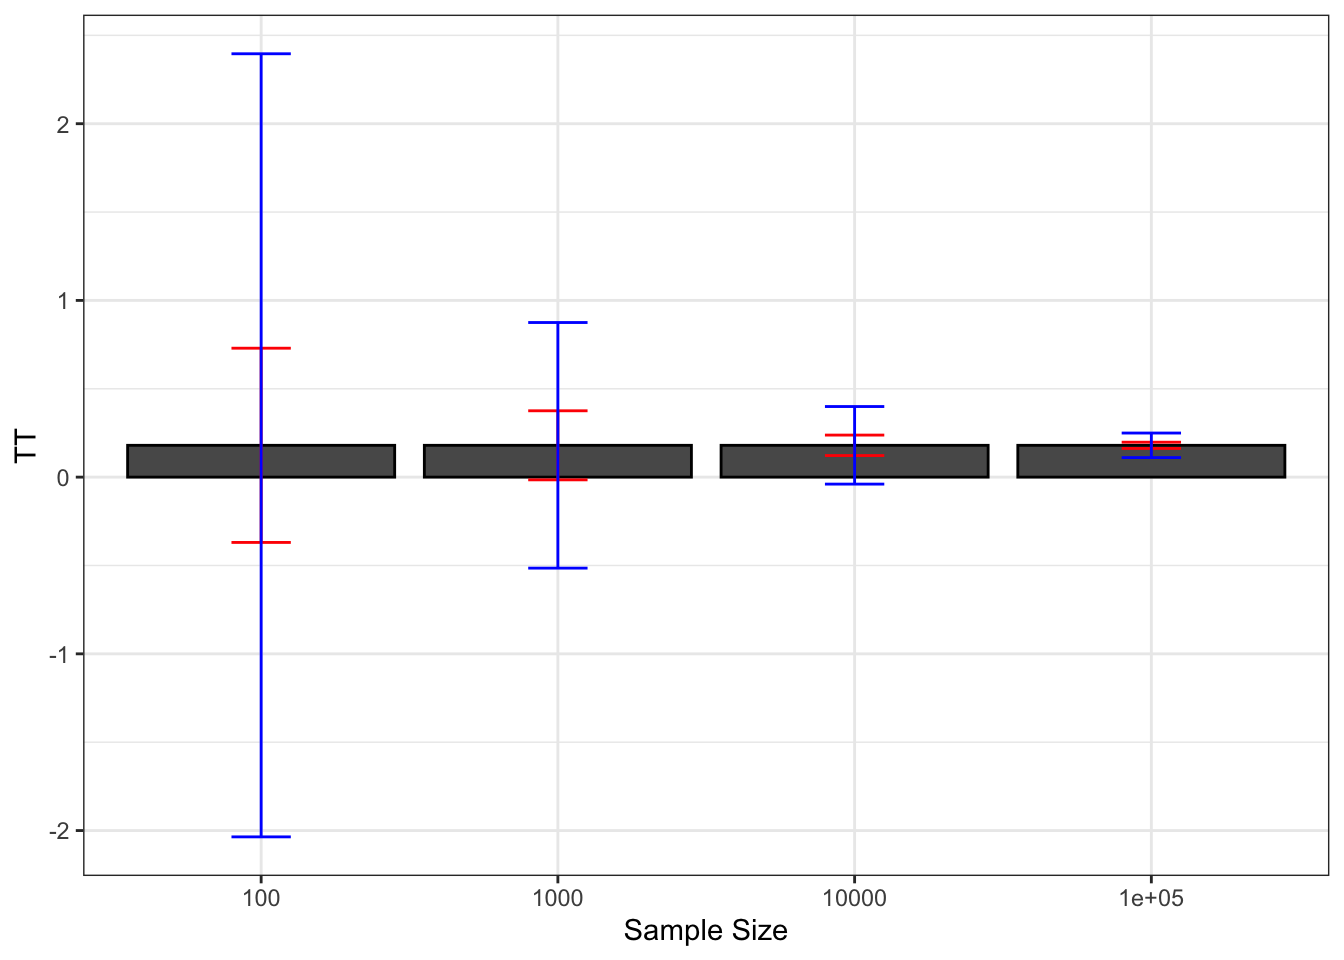 Average Chebyshev upper bound on sampling noise over replications of samples of different sizes (true sampling noise in red)